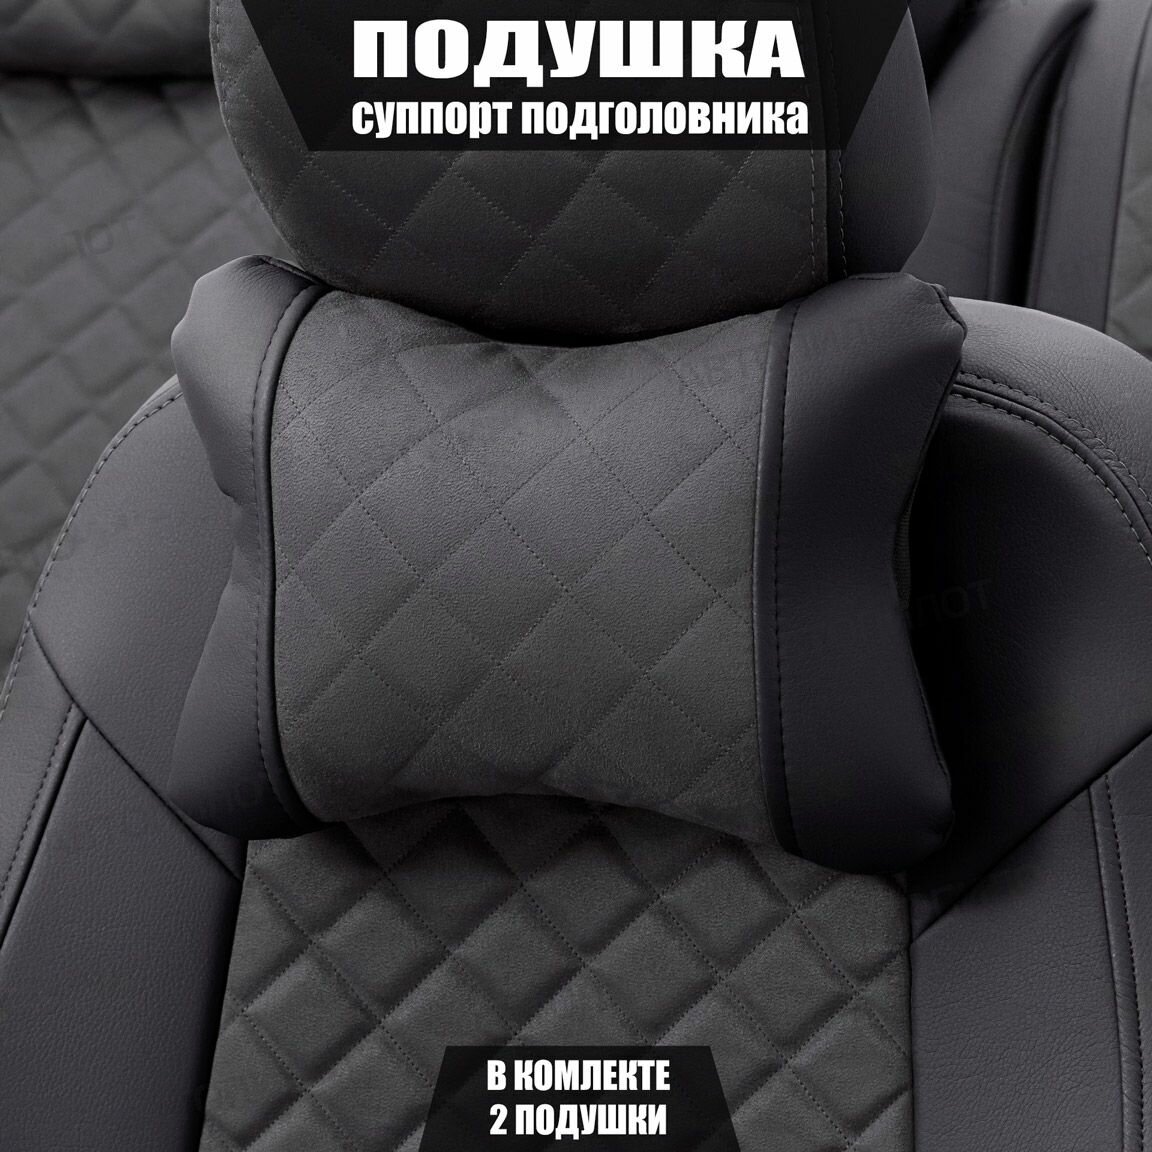 Подушки под шею (суппорт подголовника) для Мазда цкс-5 (2011 - 2015) внедорожник 5 дверей / Mazda CX-5 Ромб Алькантара 2 подушки Черный